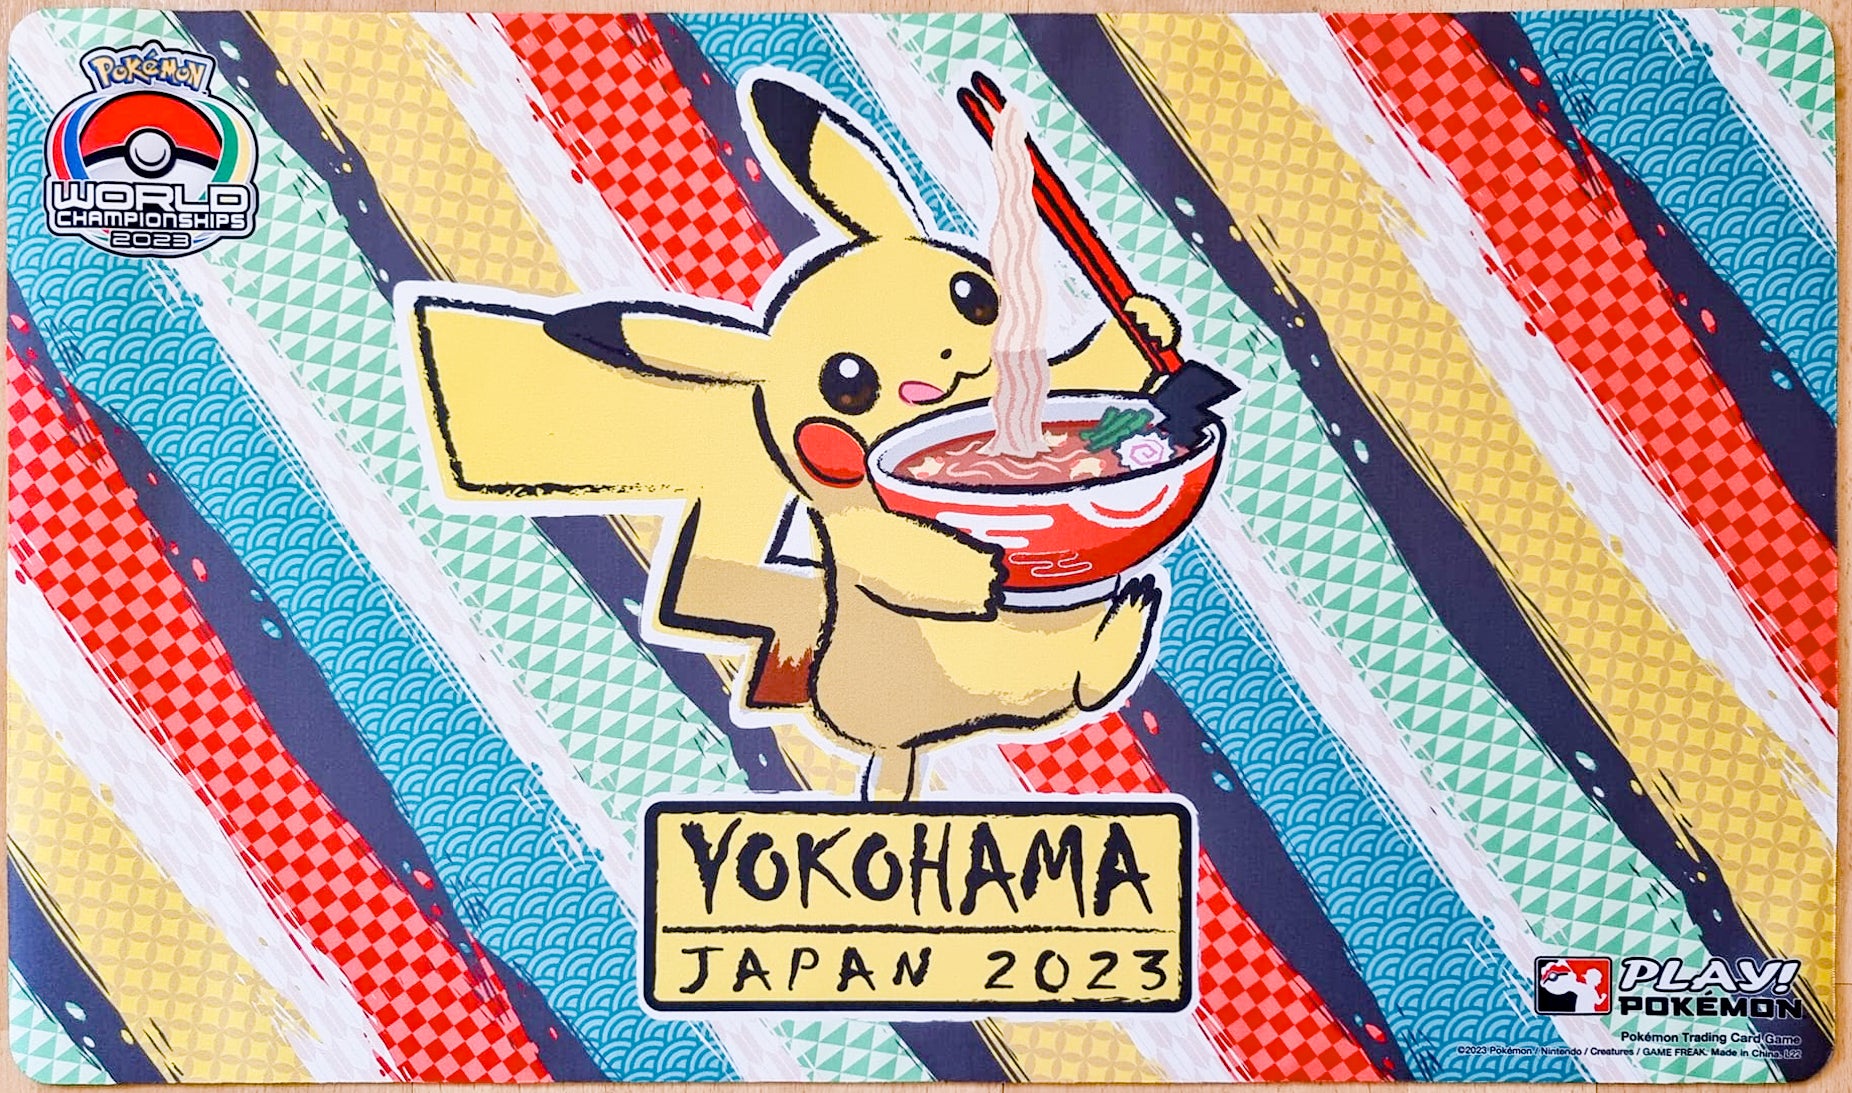 Pikachu Eating Ramen - Pokémon World Championships Yokohama 2023 - Pokémon Playmat